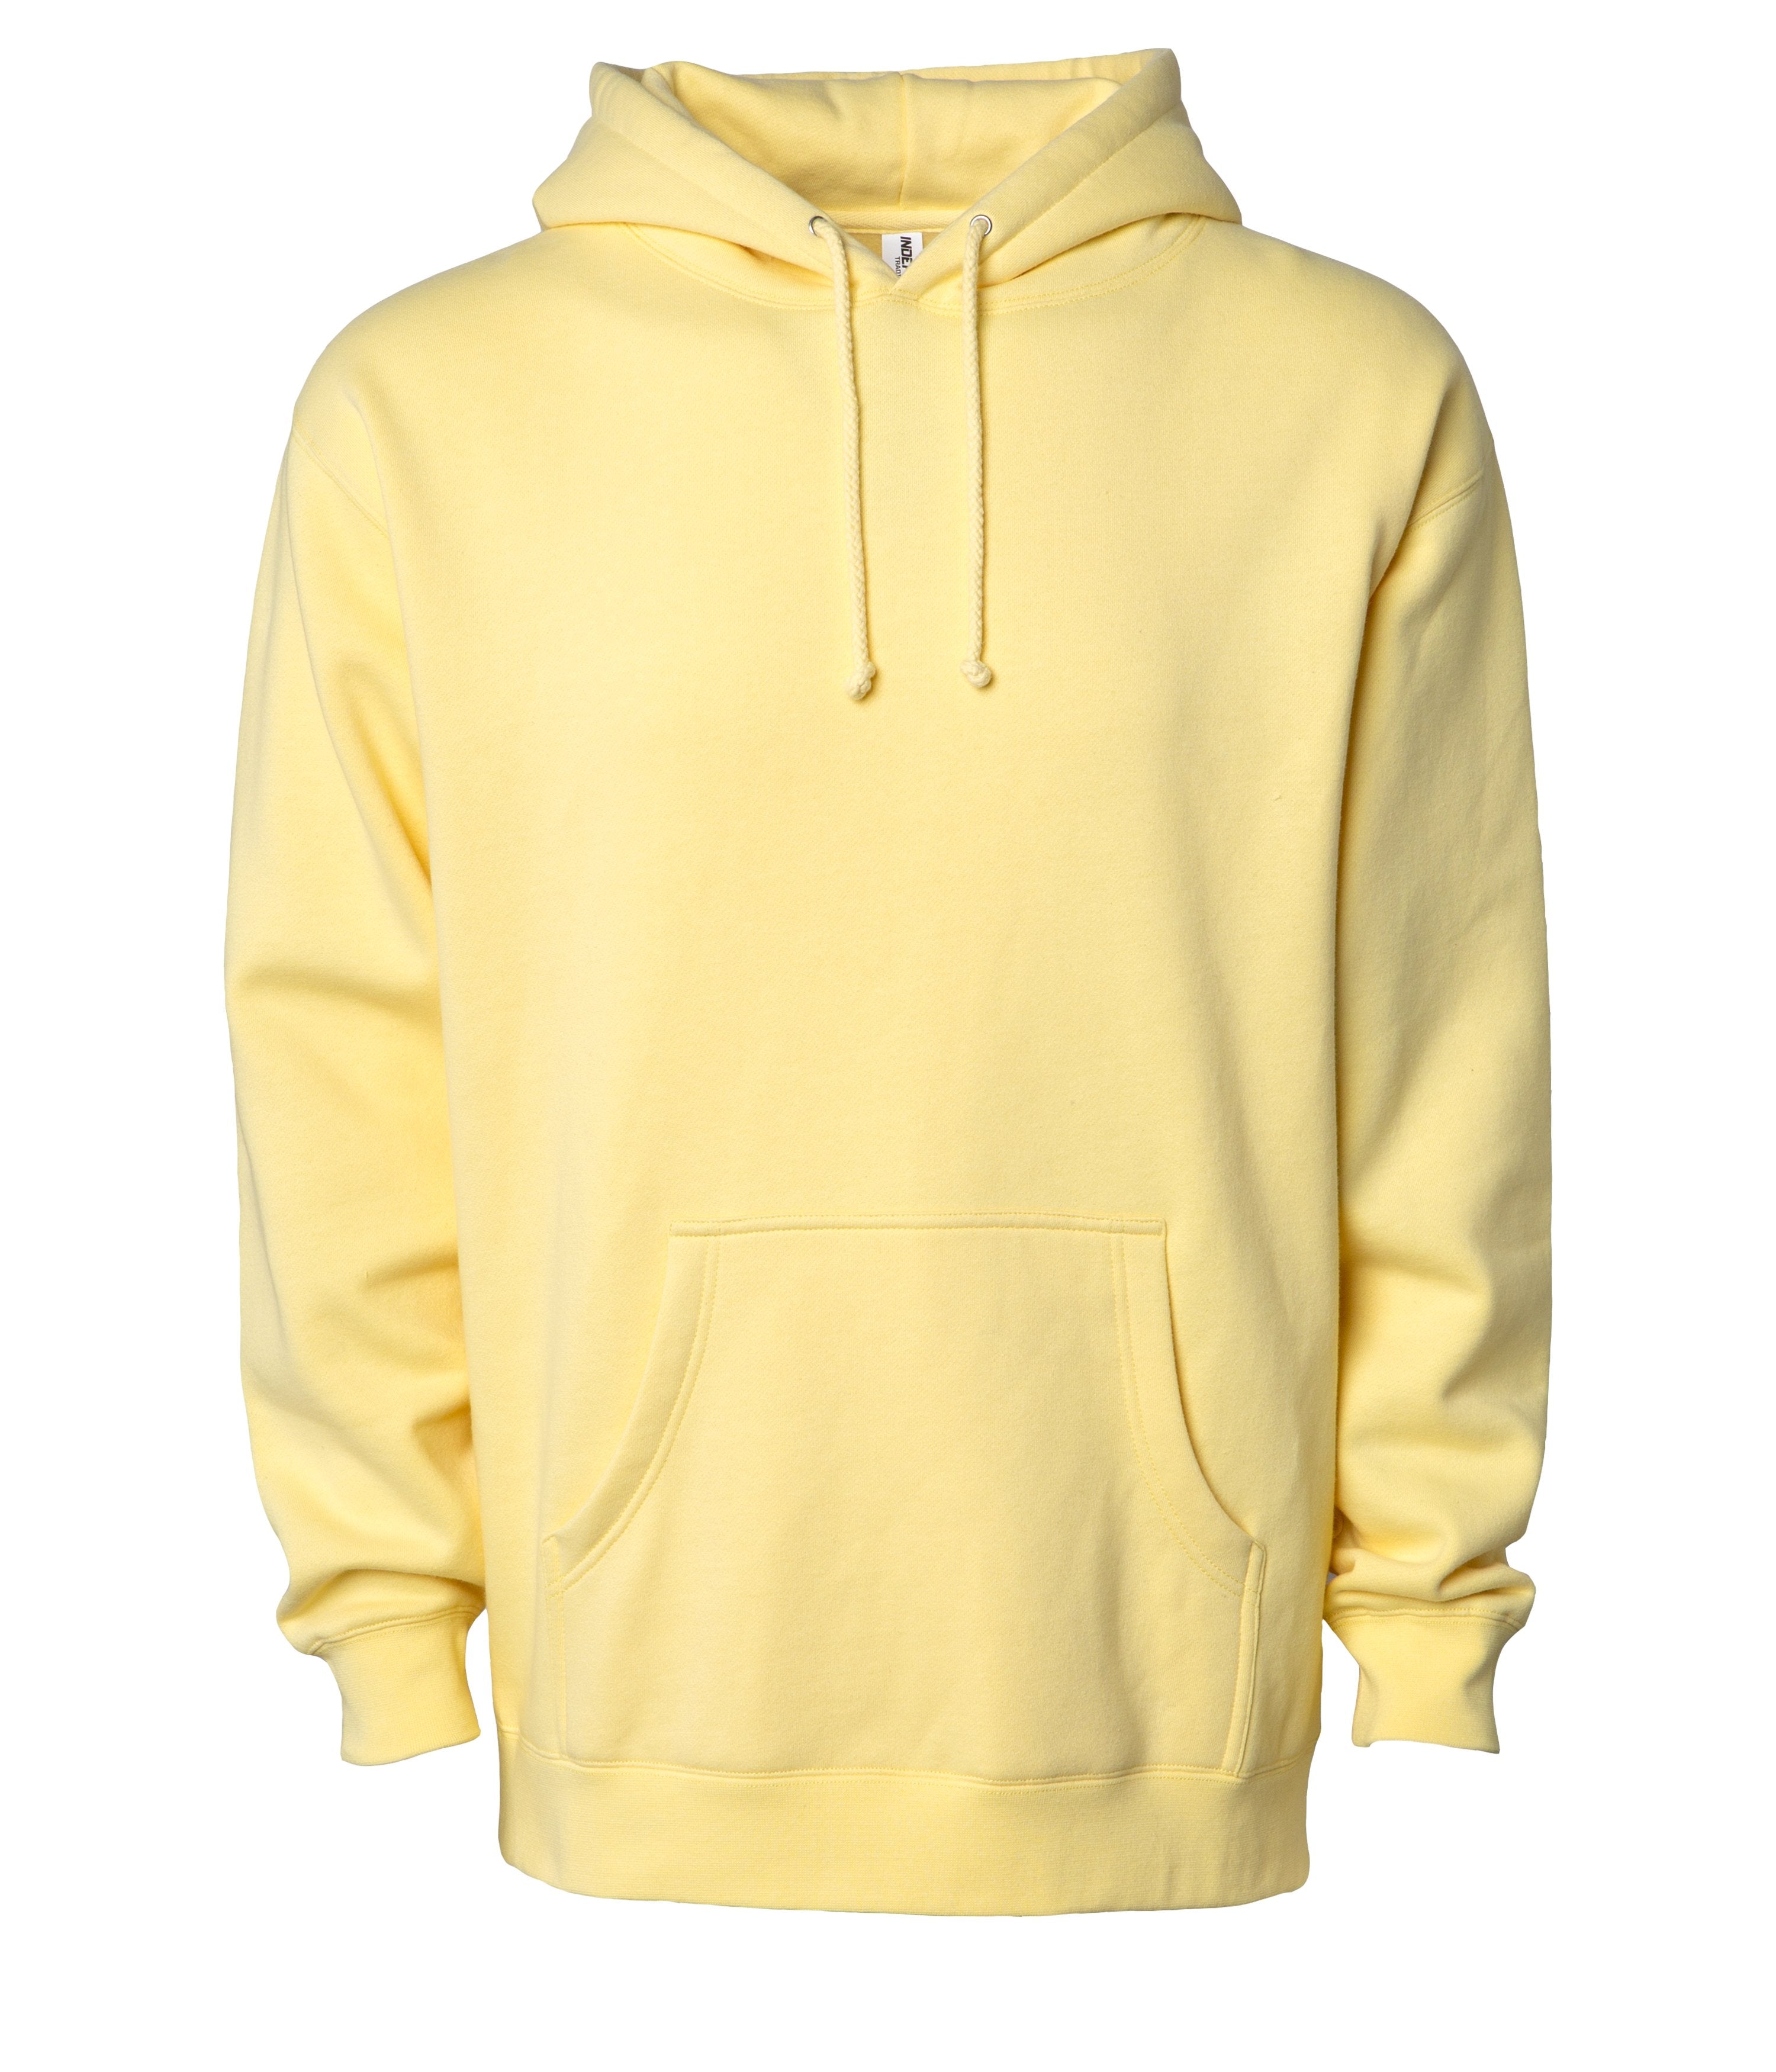 IND4000 Men's Heavyweight Hooded Pullover Sweatshirt in Light Yellow